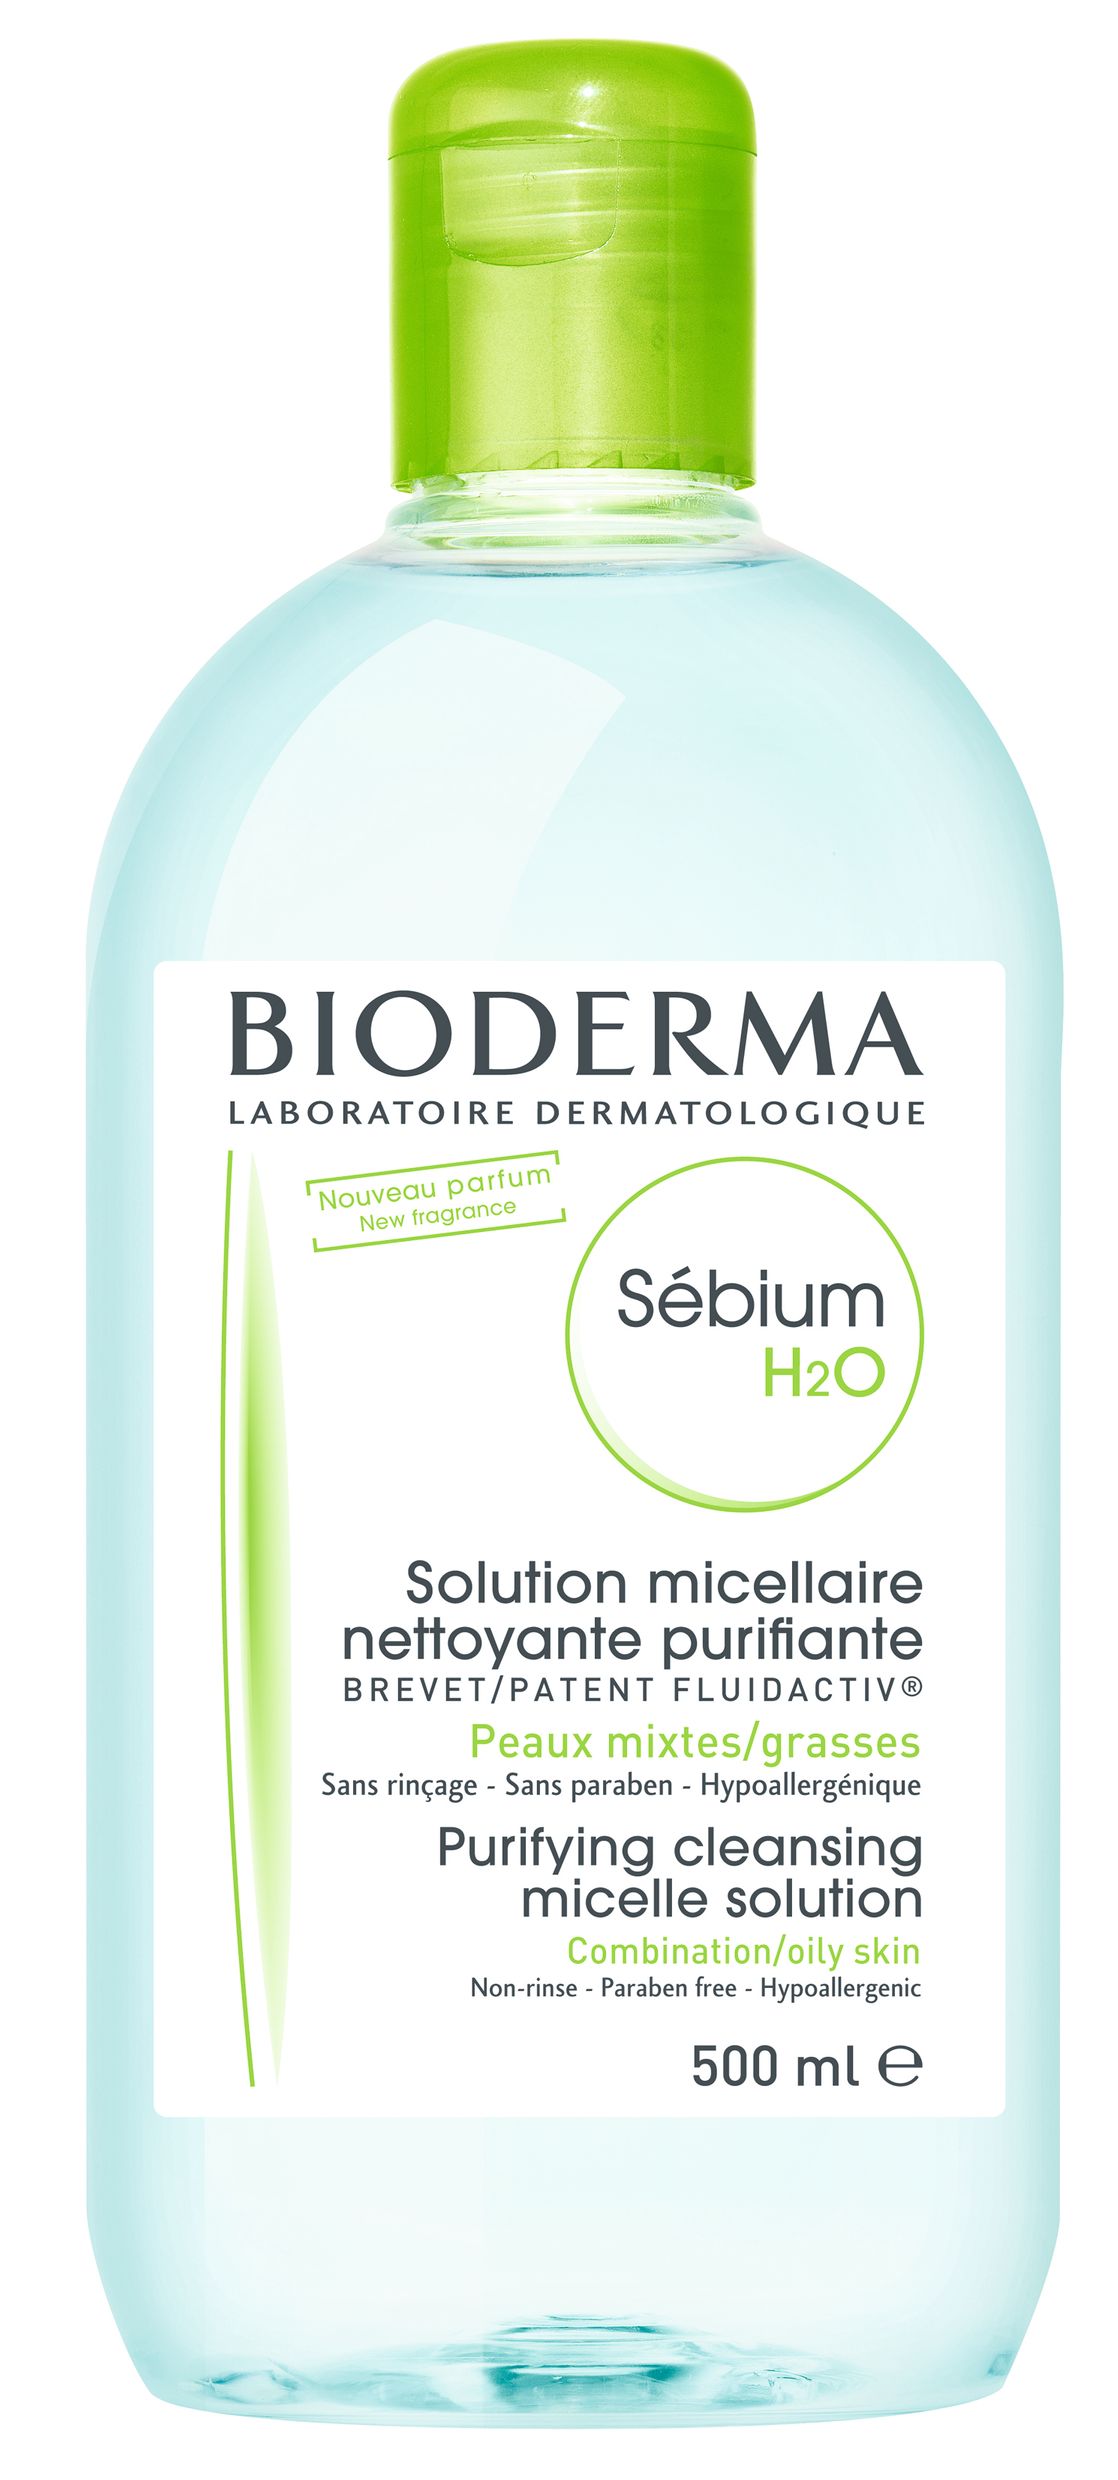 Bioderma Sébium H2O arc- és sminklemosó